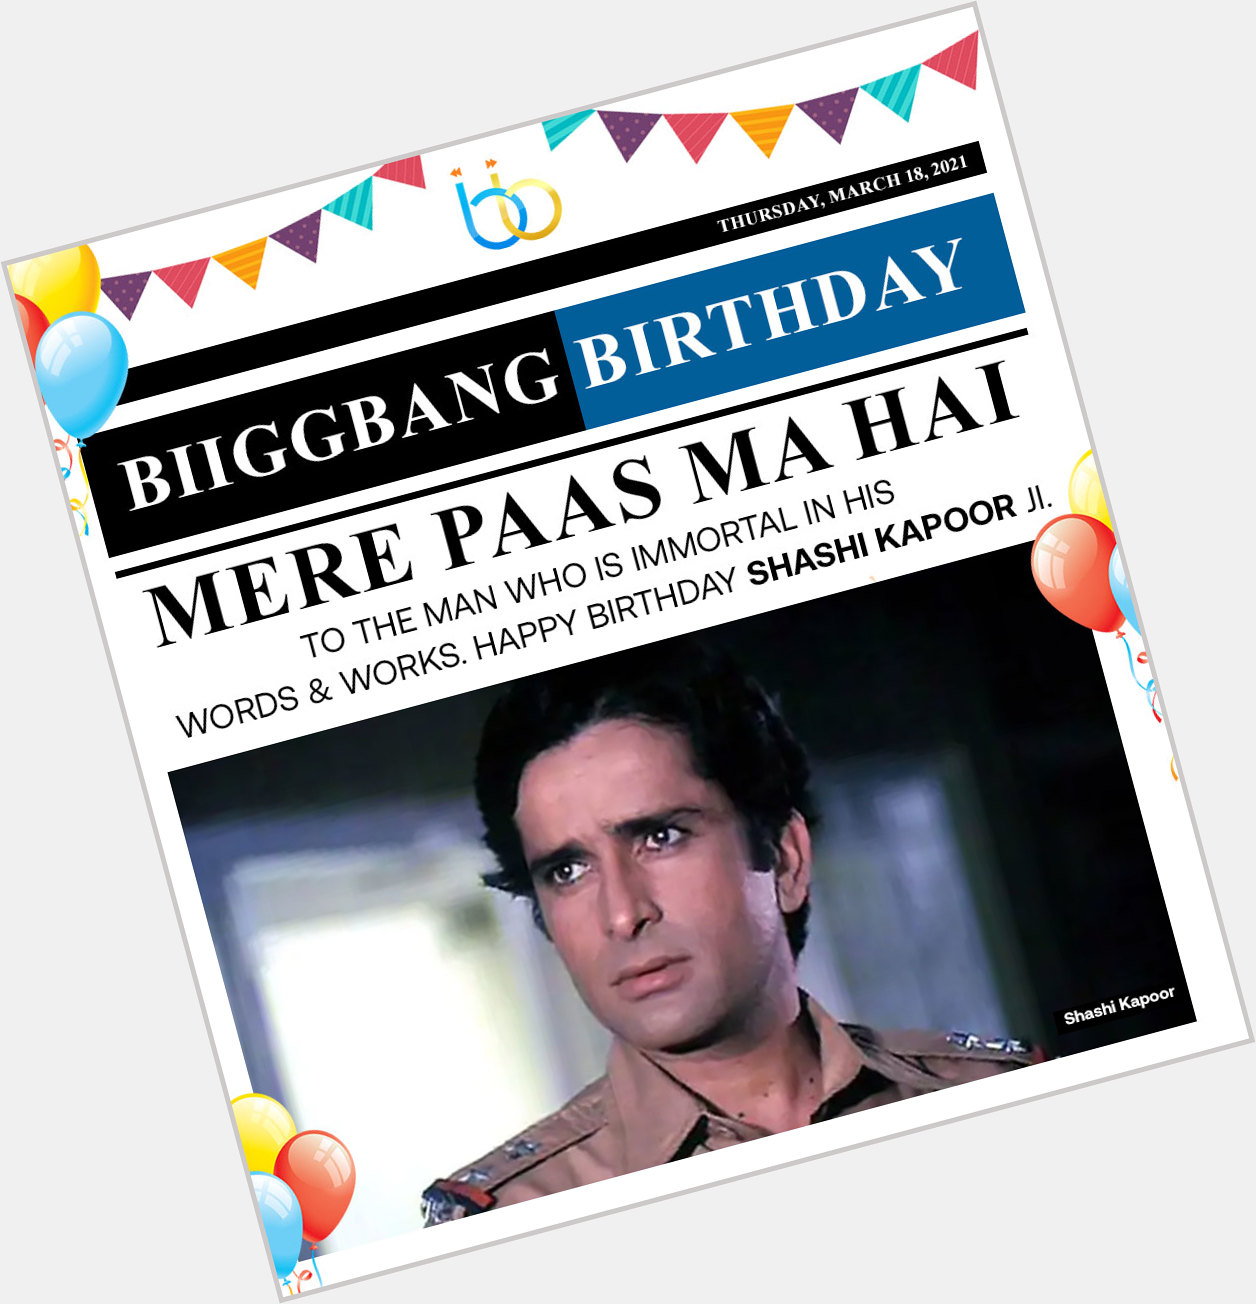 Wishing legendary Shashi Kapoor Ji a Happy Biiggbang Birthday!!  